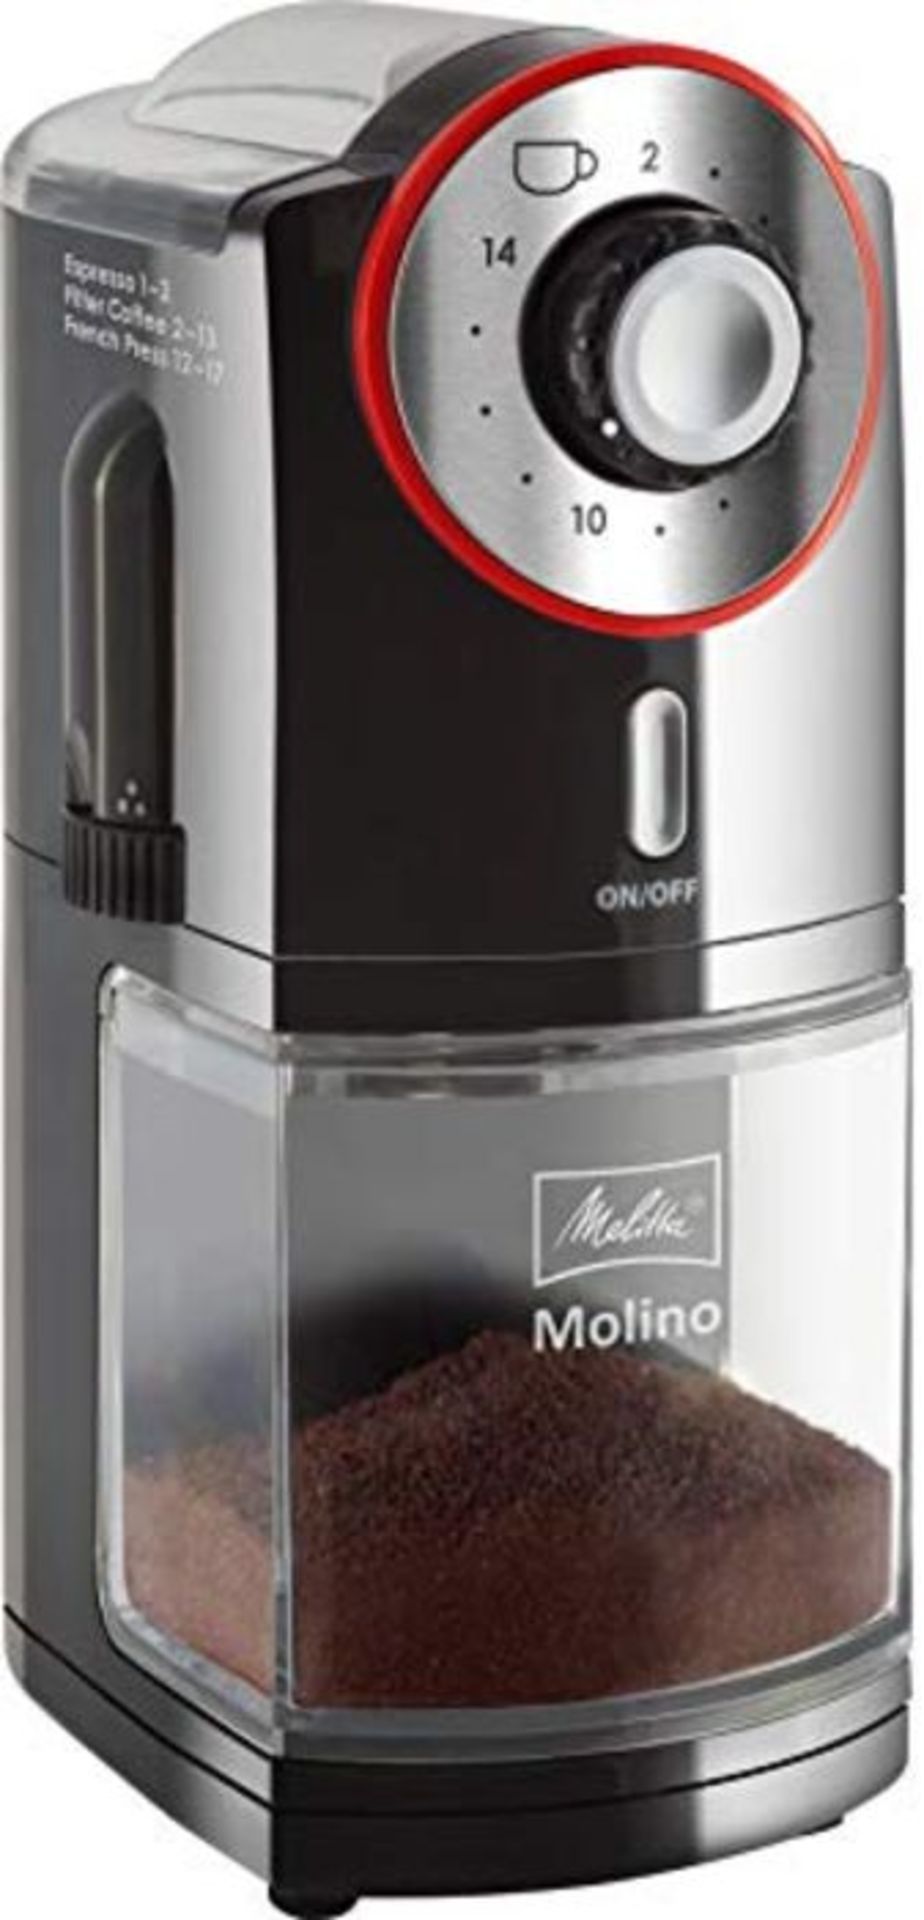 Melitta Molino Coffee Grinder, 1019-01, Electric Coffee Grinder, Flat Grinding Disc, B